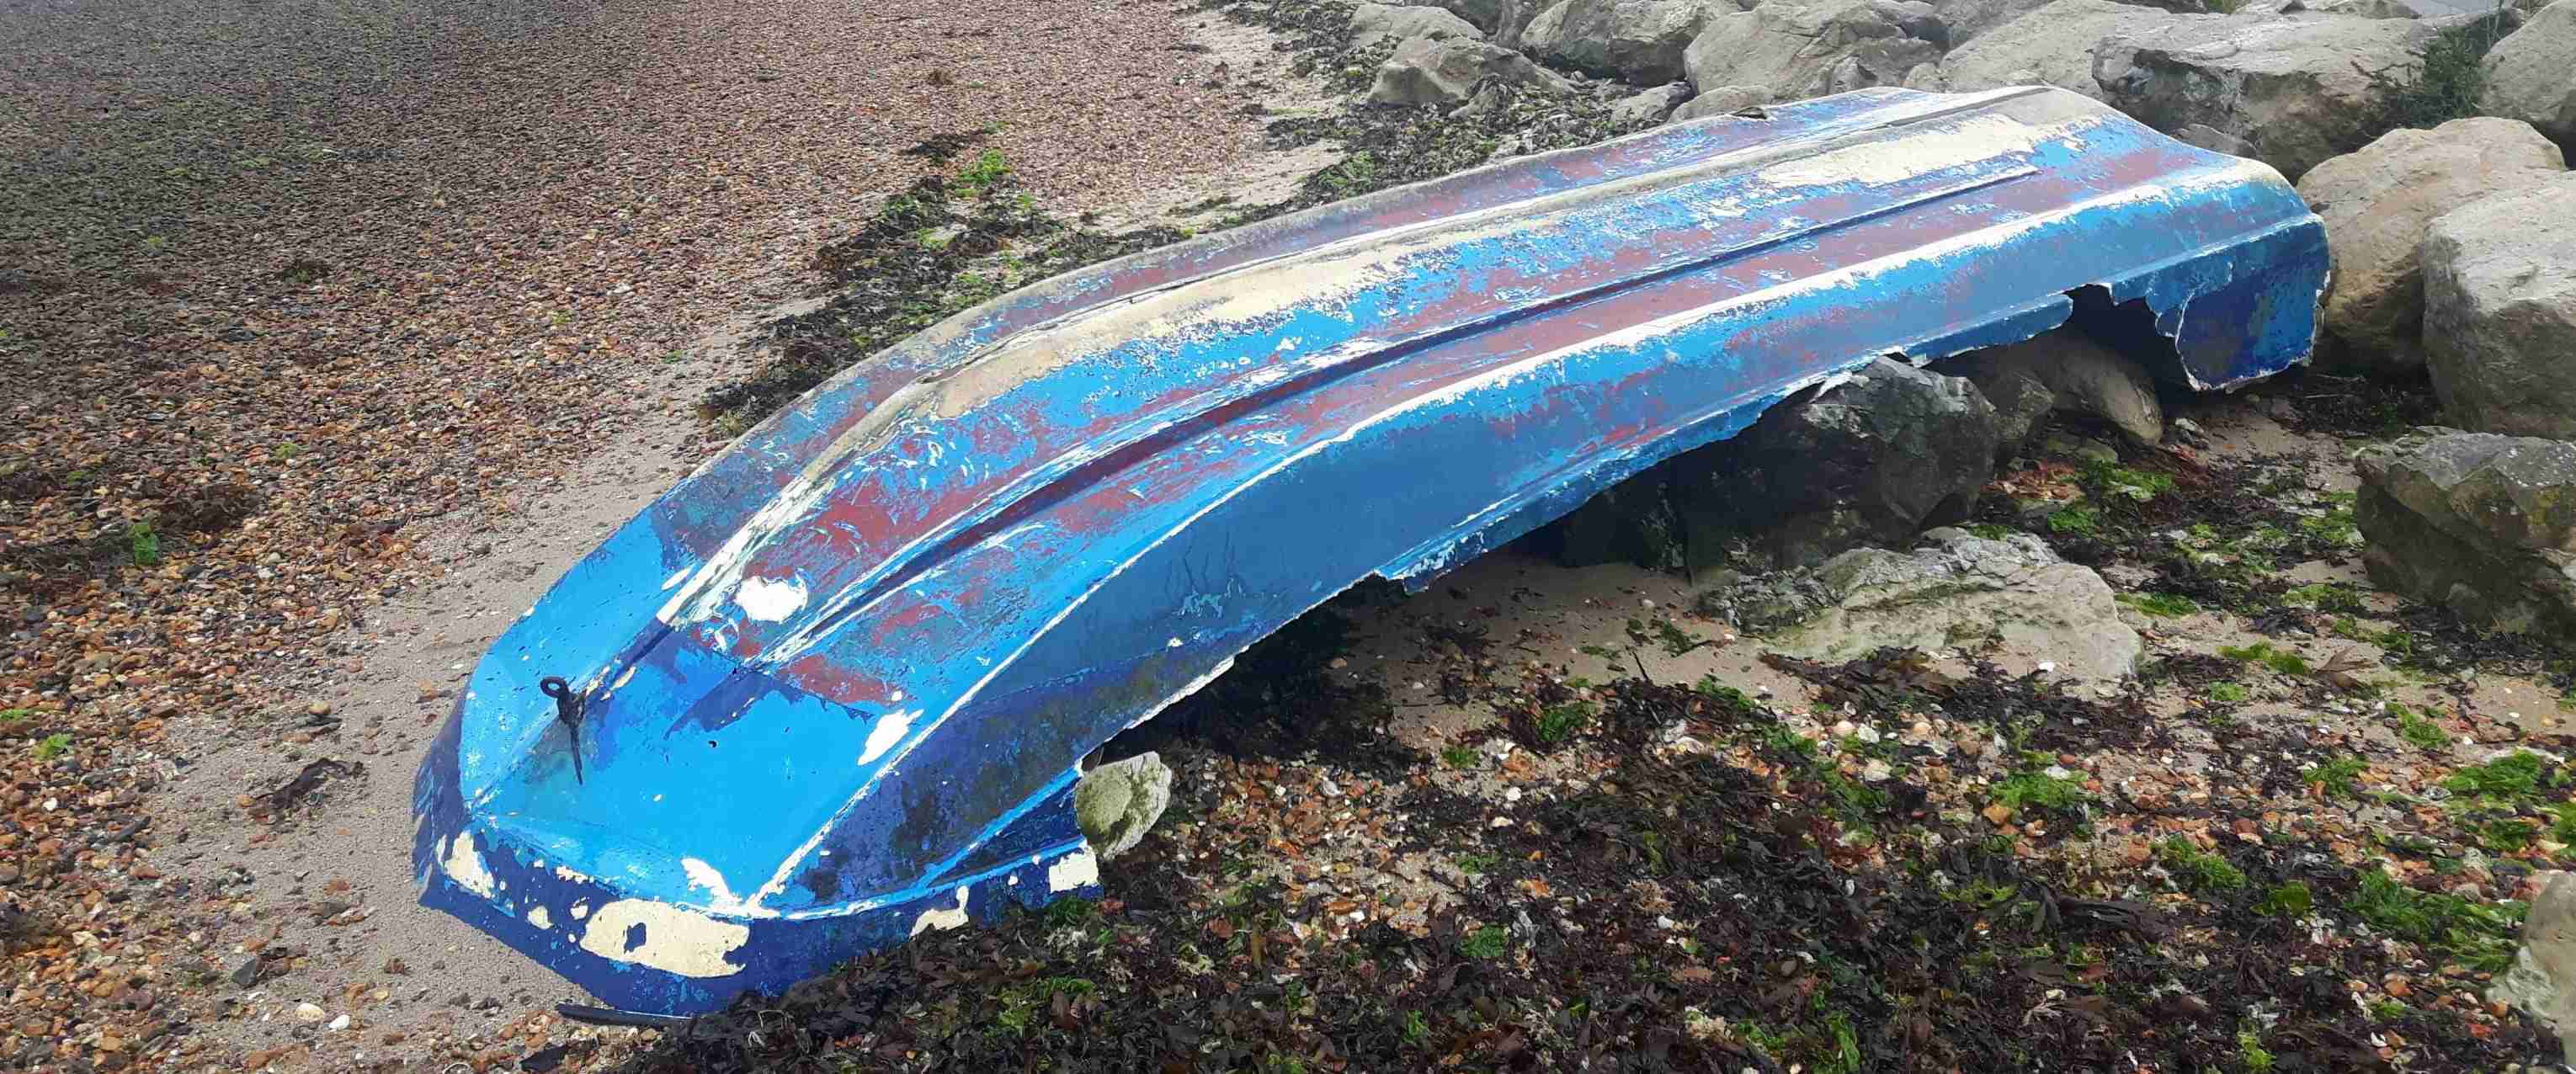 A damaged tender at Baiter Park, Poole